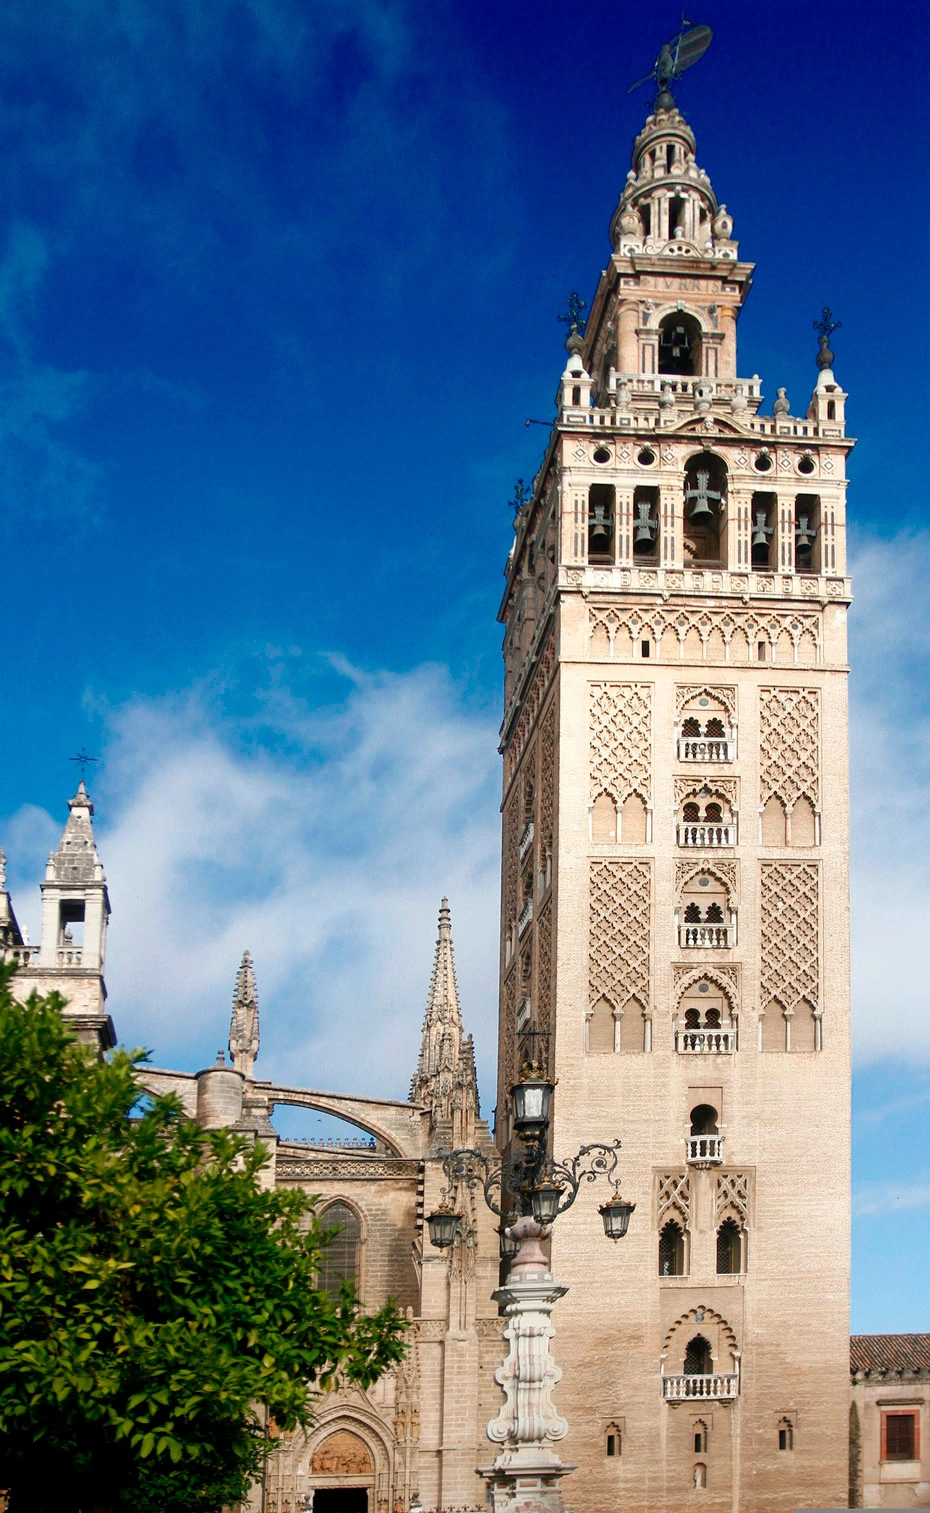 Visit the Giralda of Seville